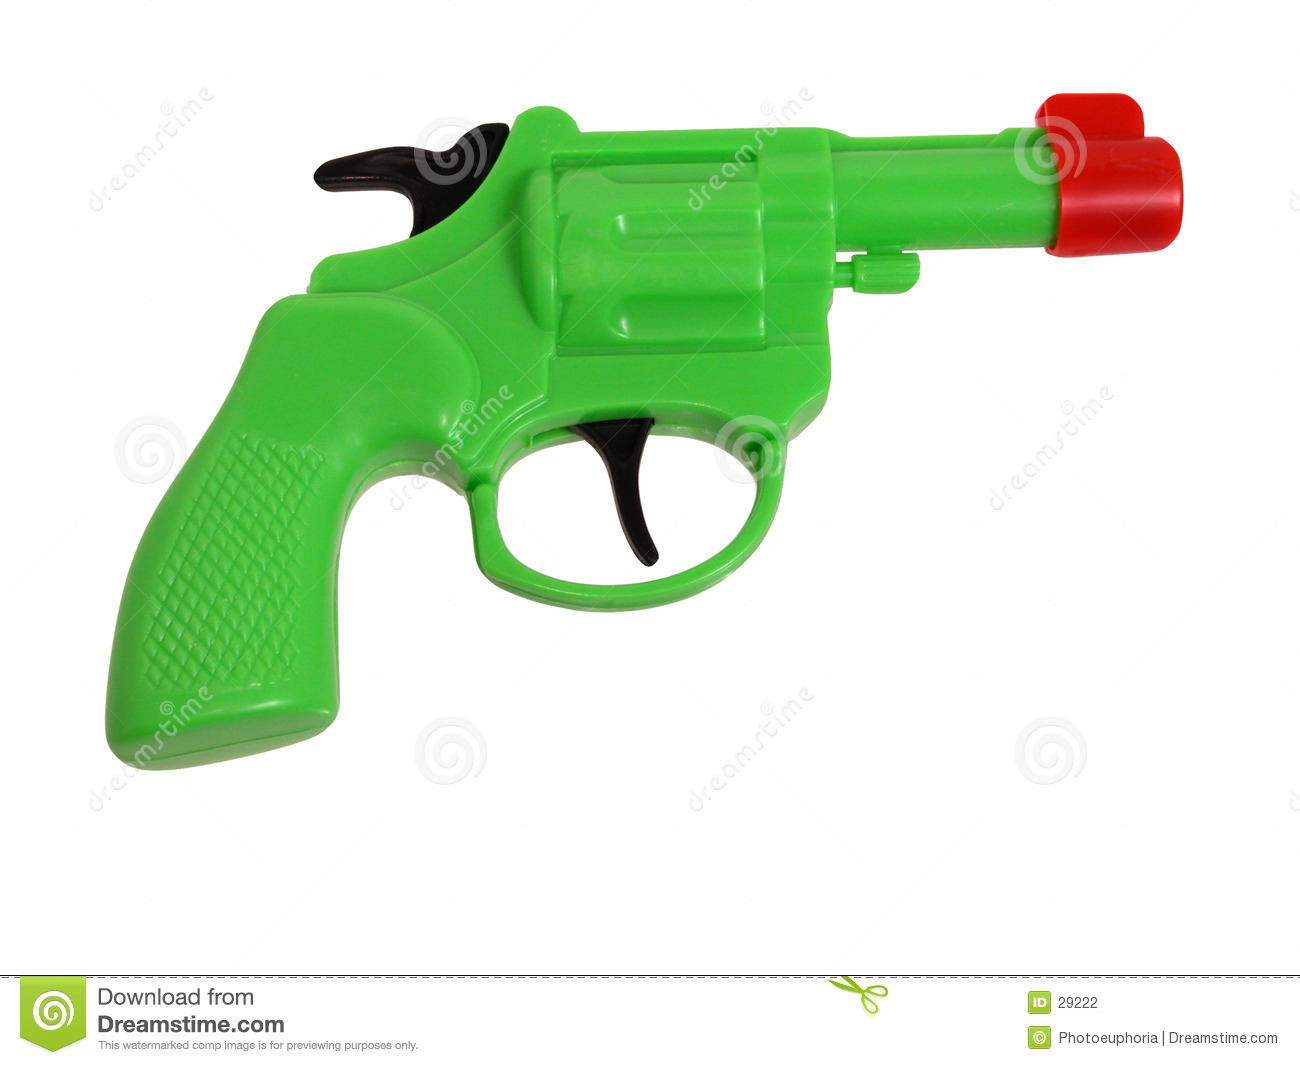 Toys  Green Plastic Gun Stock Photography   Image  29222